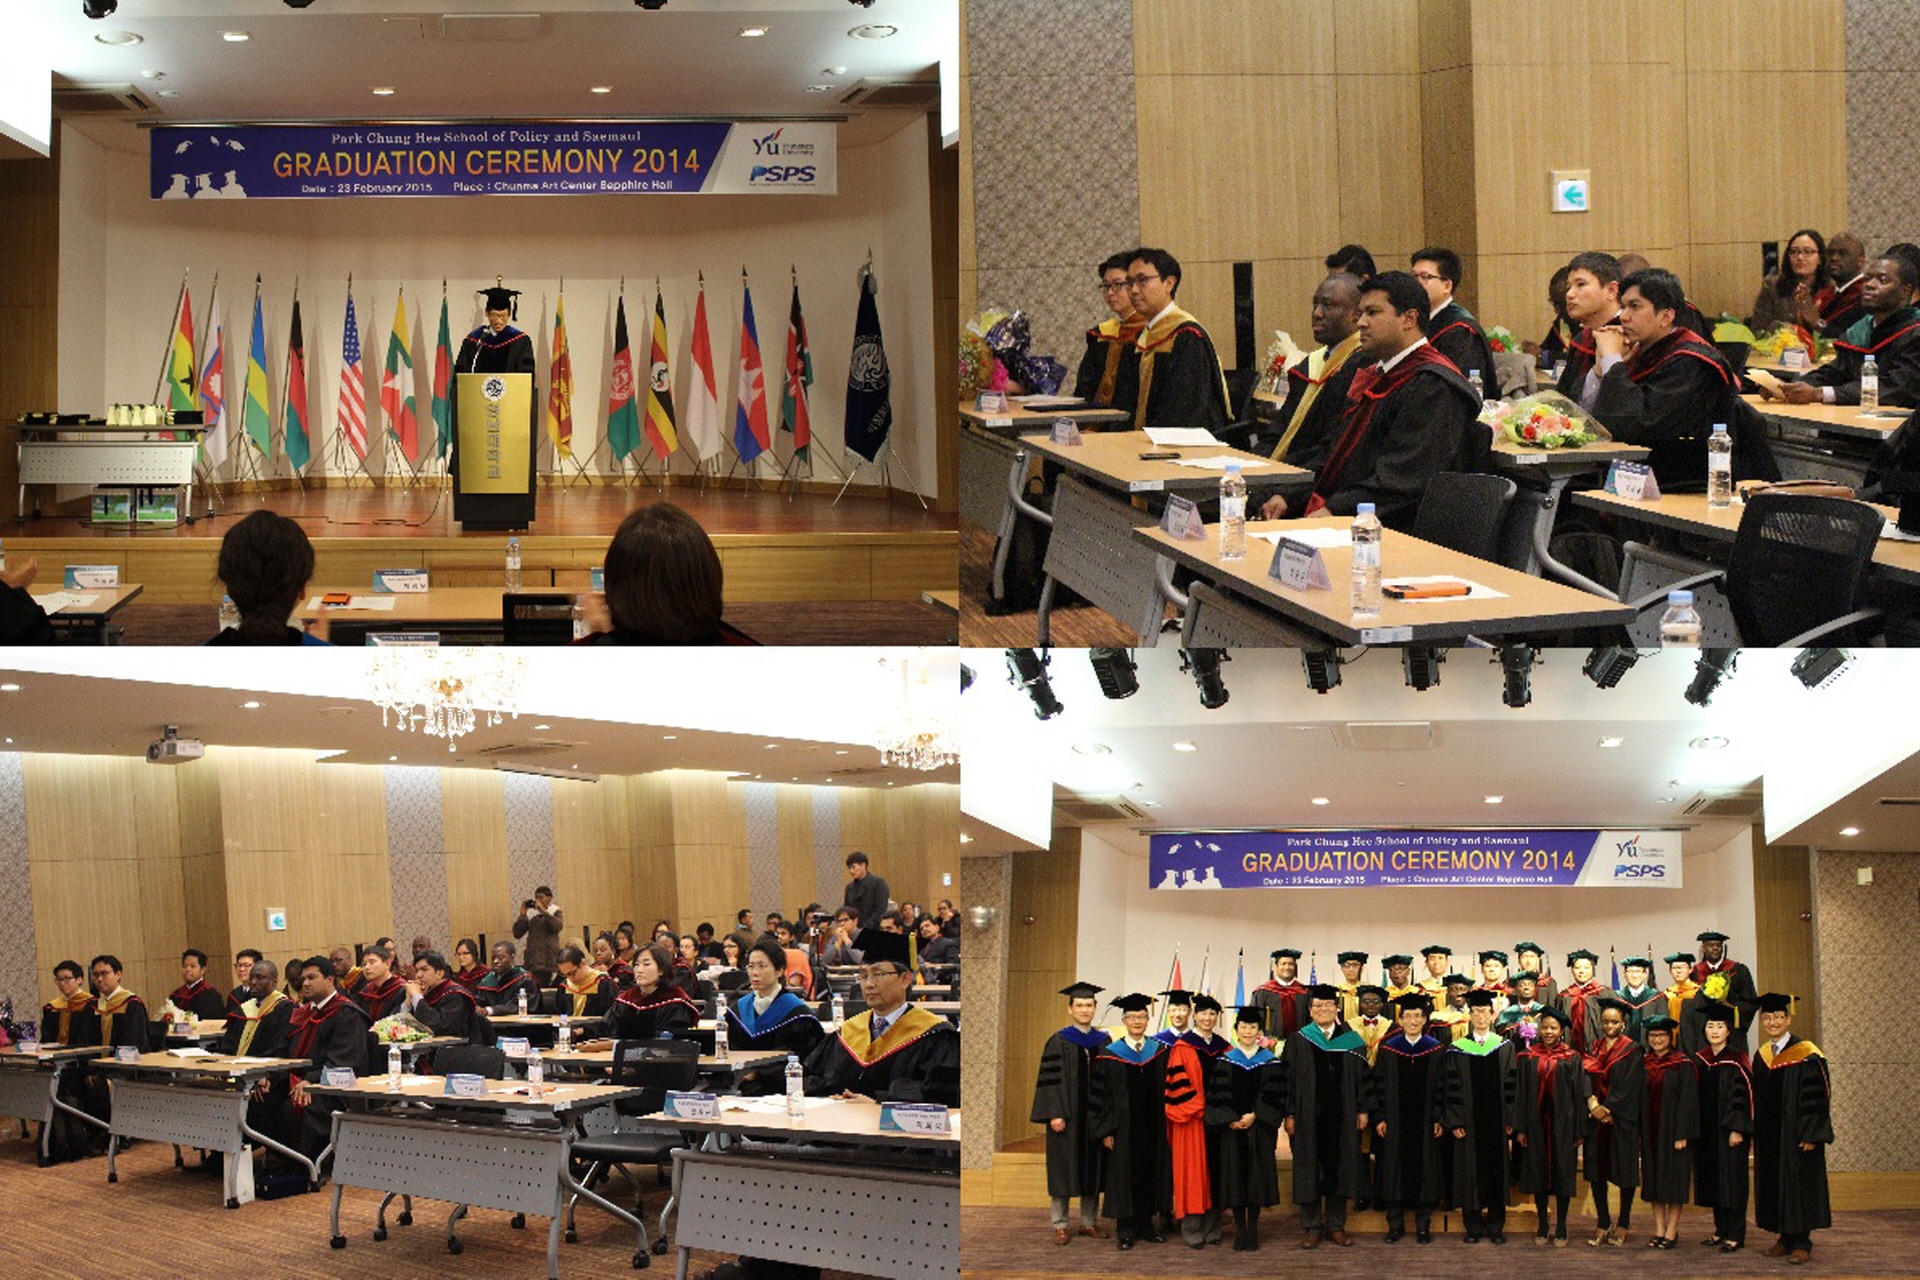 Graduation Ceremony 2014 23 February 2015